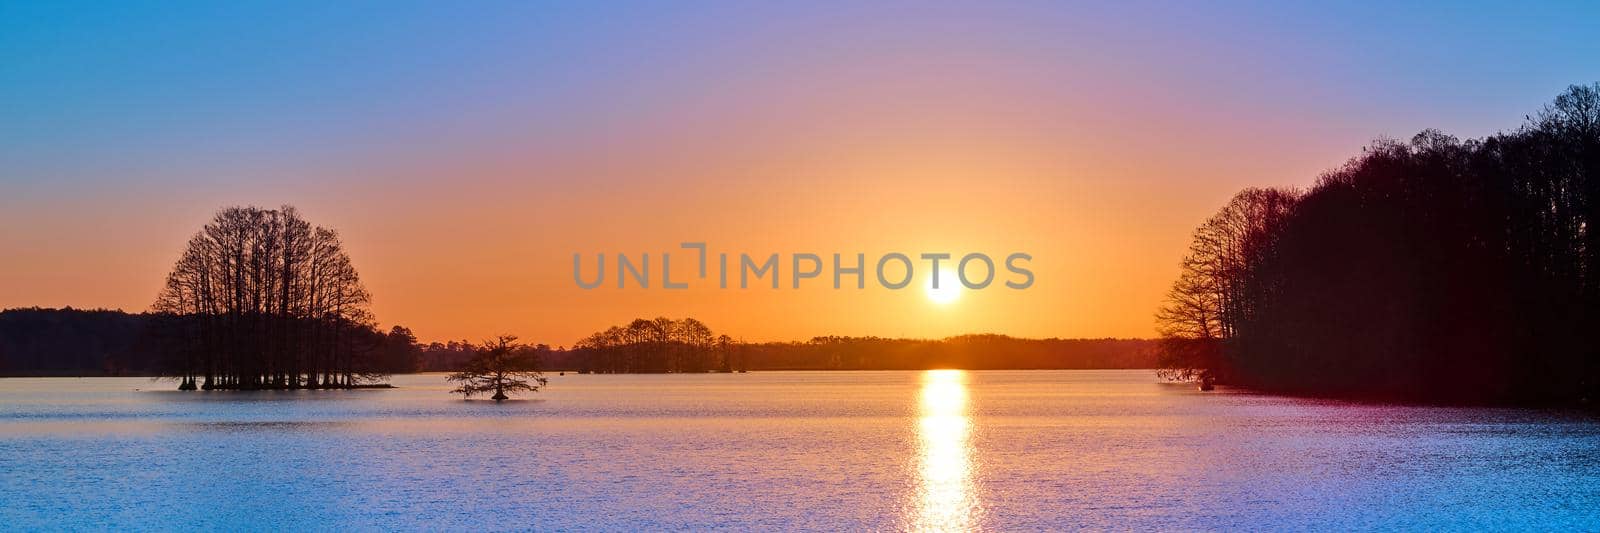 Sunrise at Lake Talquin State Park near Tallahassee, FL. by patrickstock